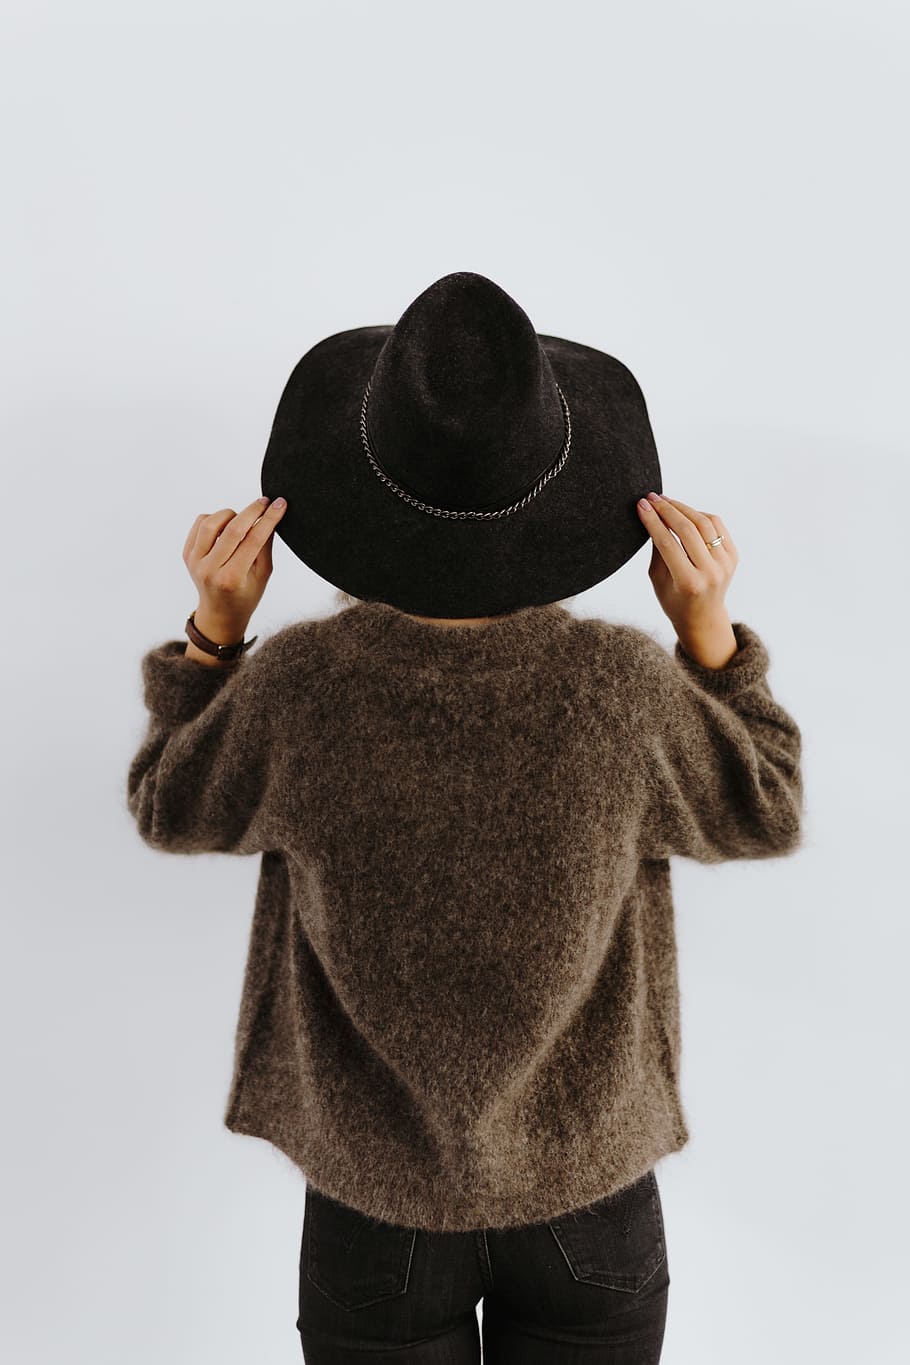 woman, brown, sweater, black, hat, head, black hat, studio shot, white background, clothing